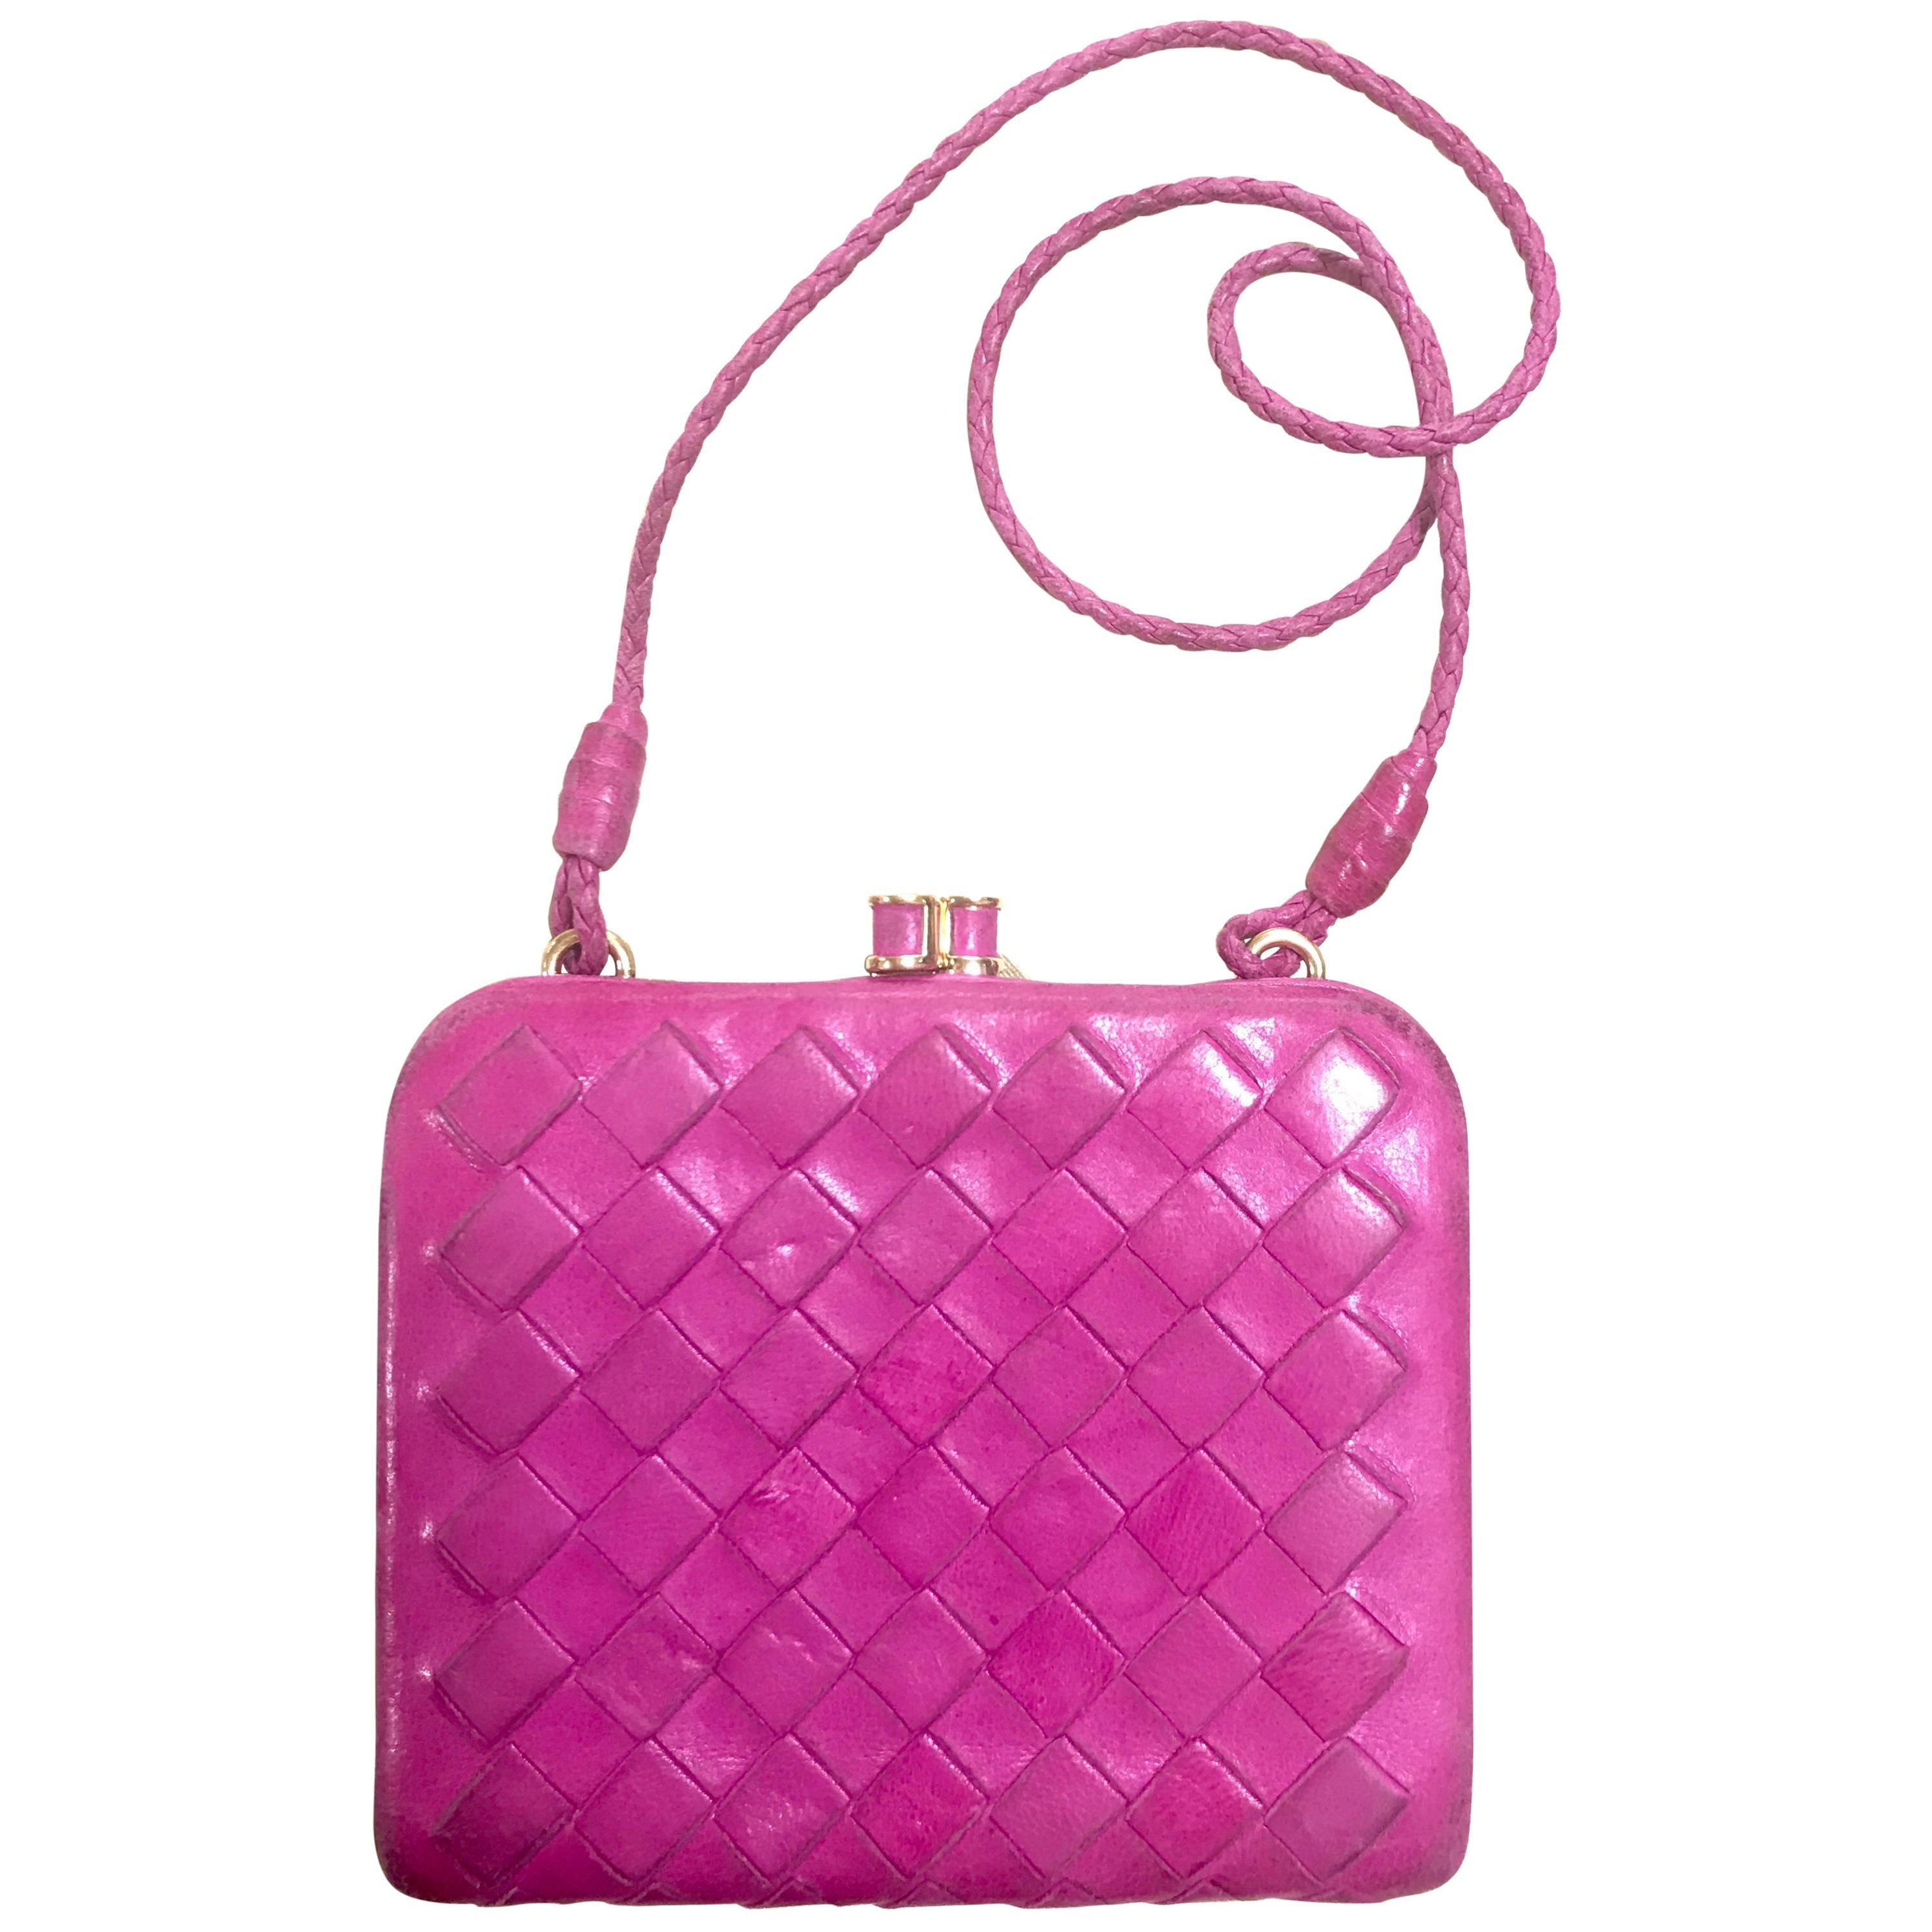 Vintage Bottega Veneta pink intrecciato woven leather wallet, coin case purse.  For Sale